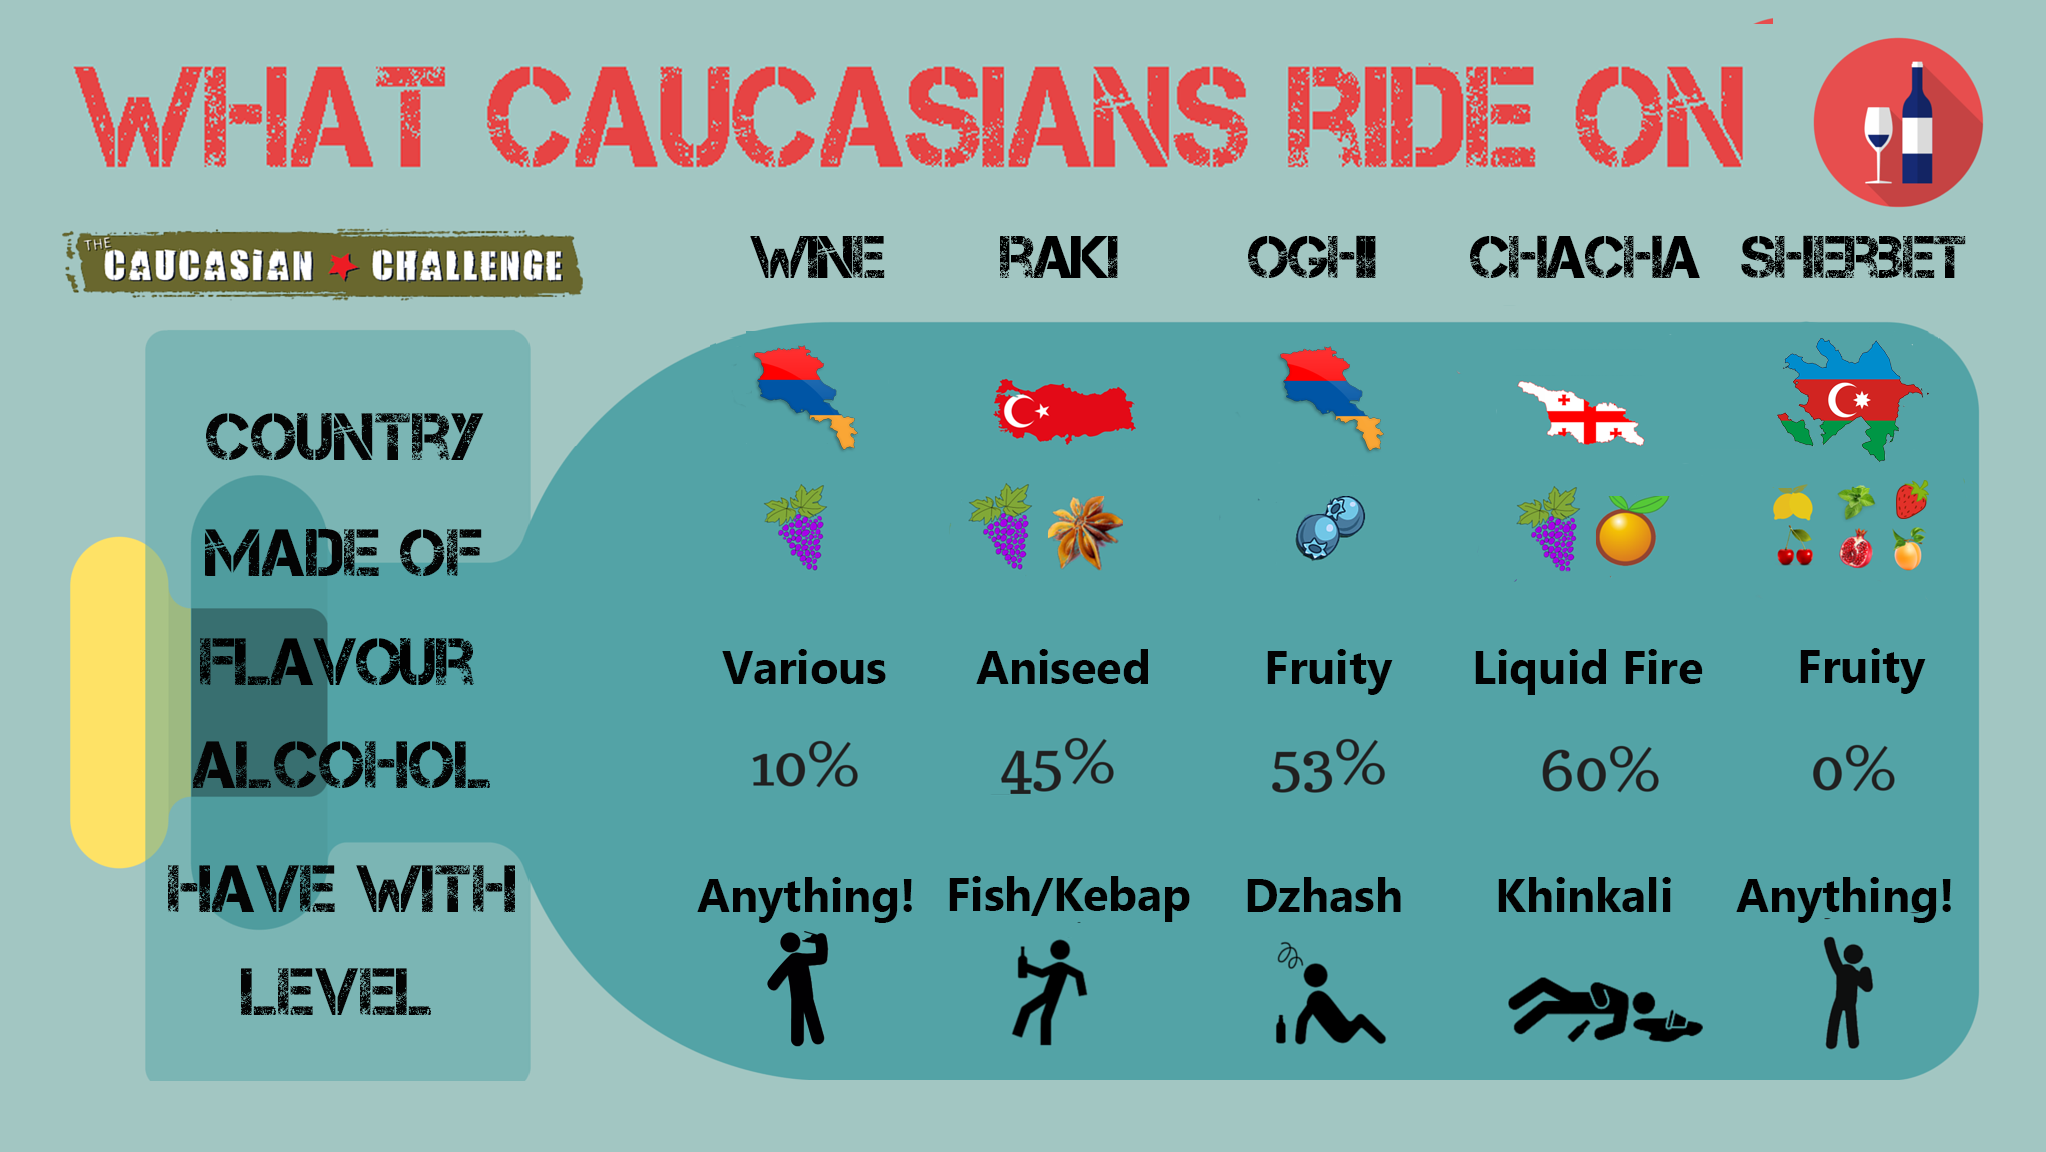 What caucasians ride on6